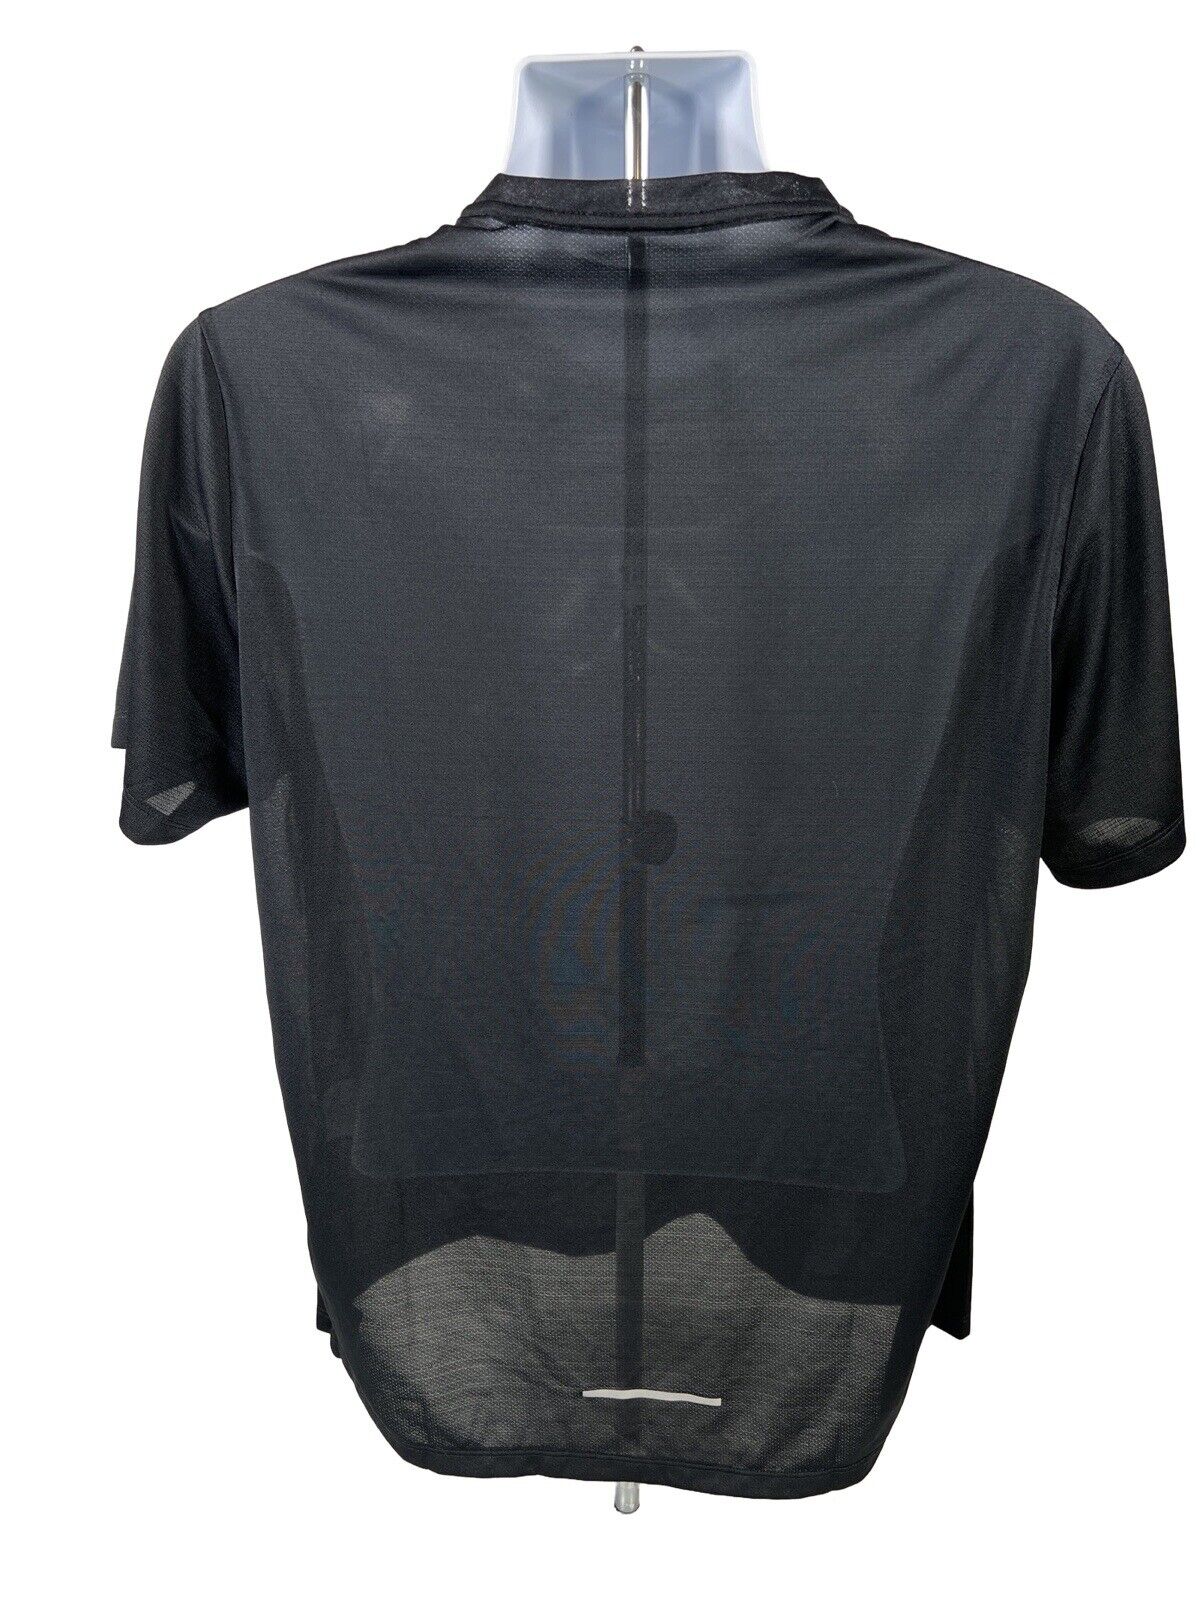 Nike Men's Black Dri-Fit Running Short Sleeve Shirt - L